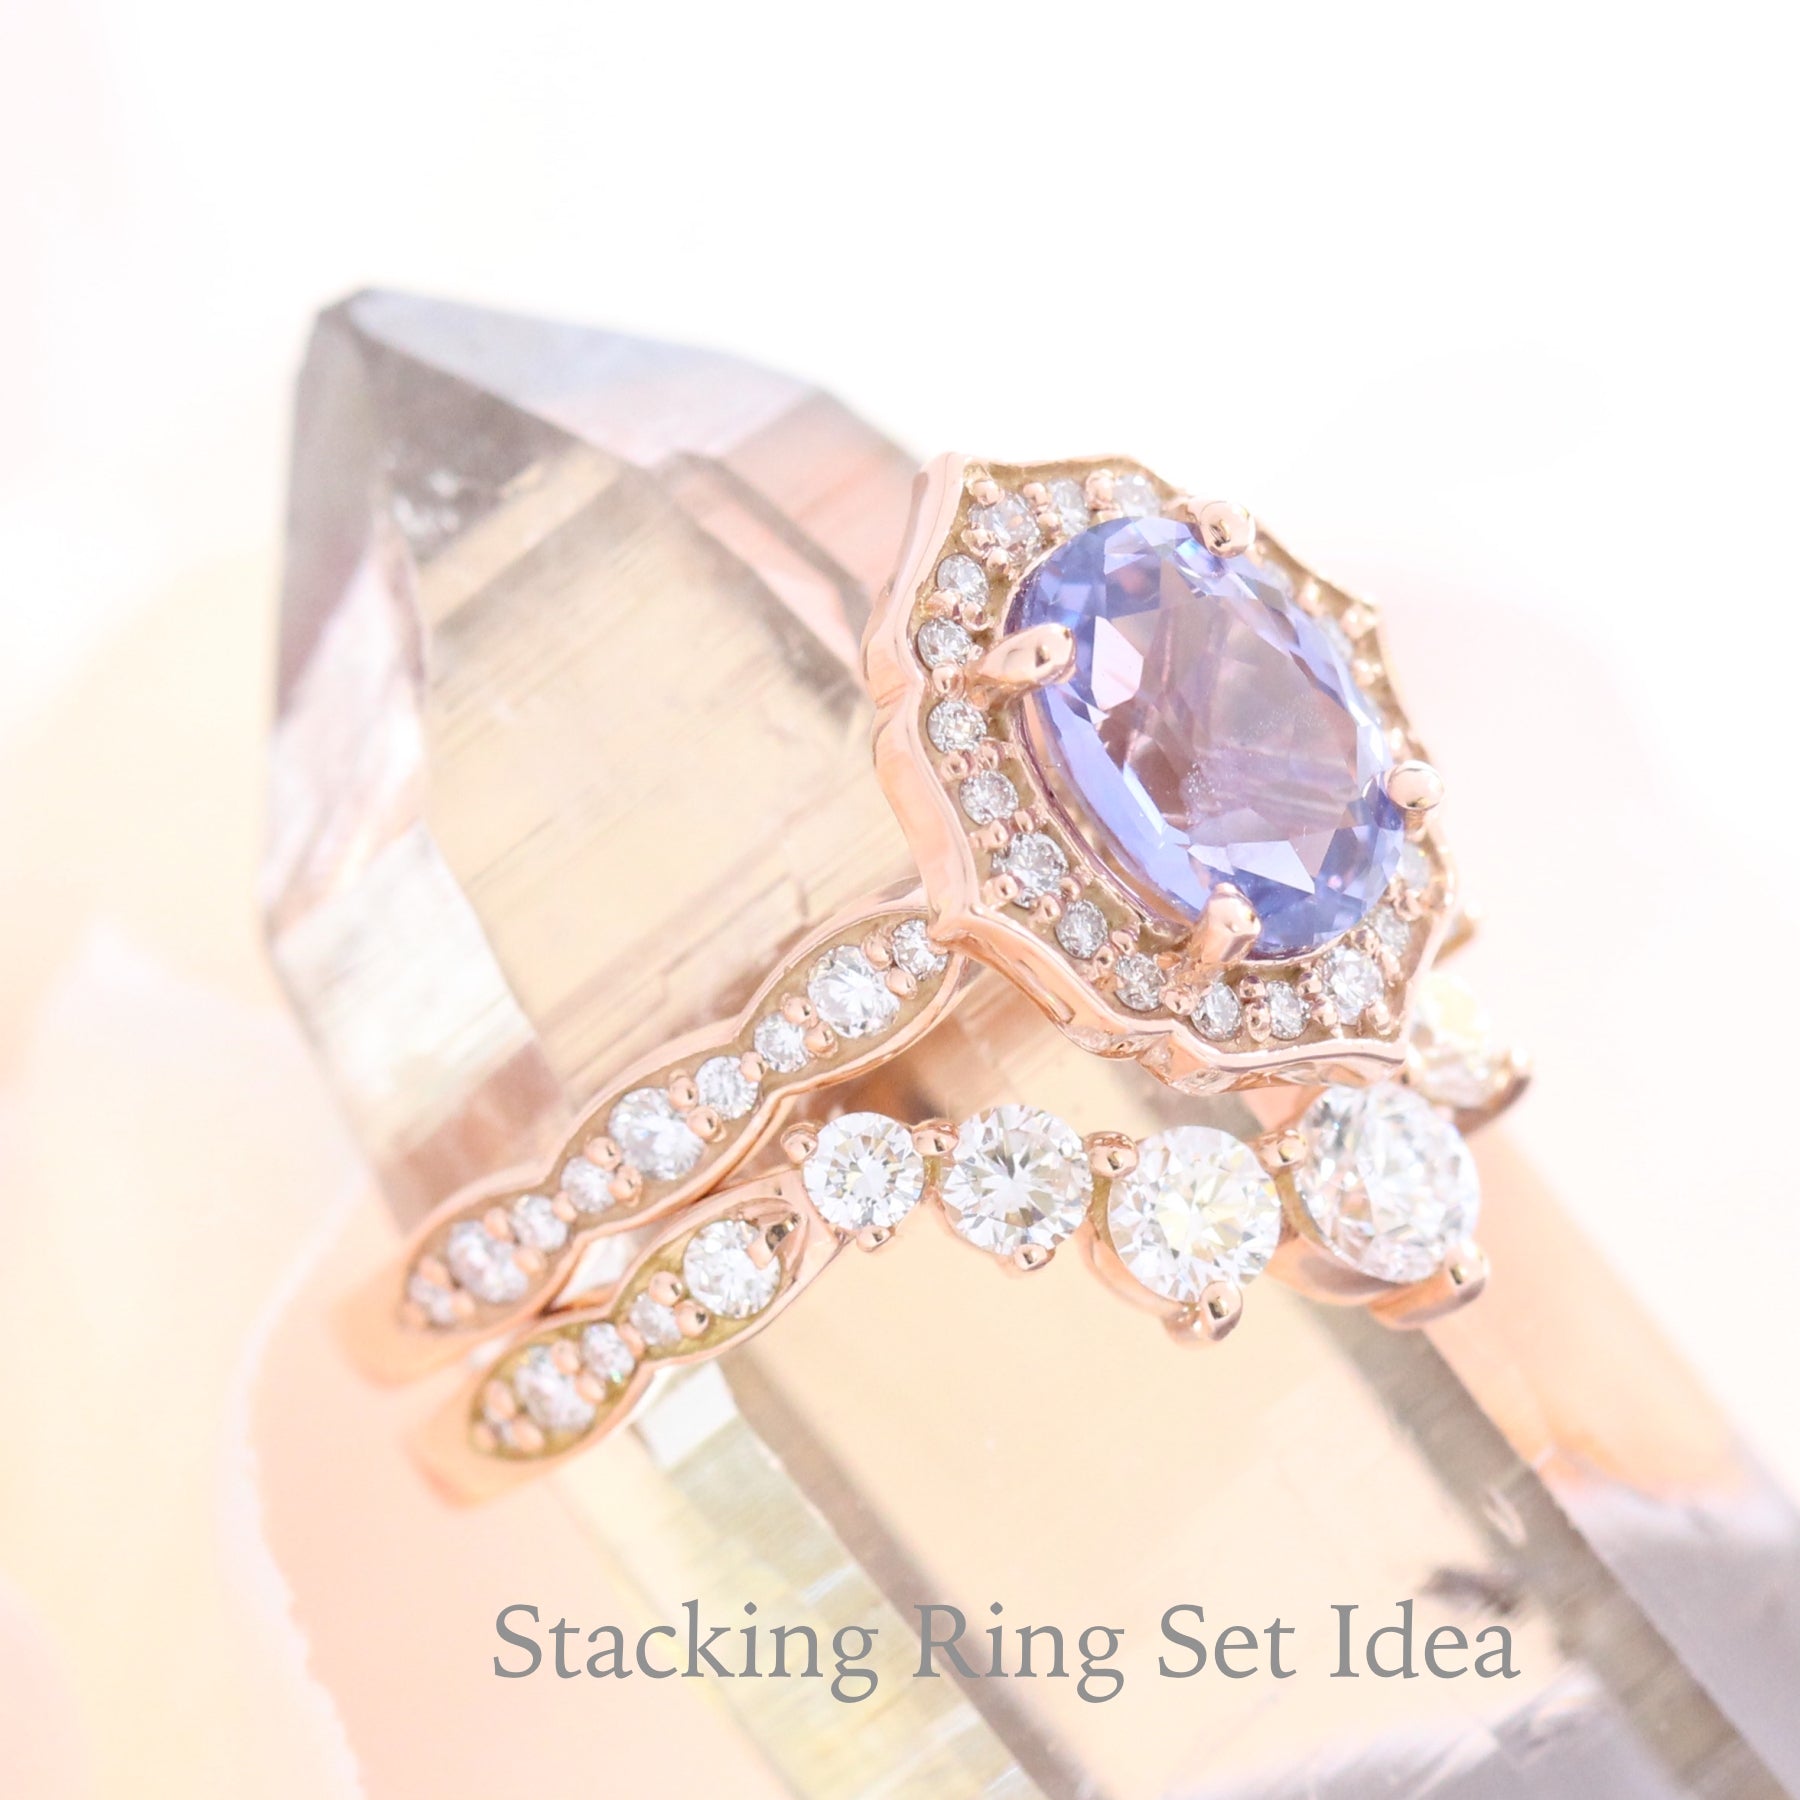 Lavender purple sapphire engagement ring rose gold vintage halo diamond ring la more design jewelry